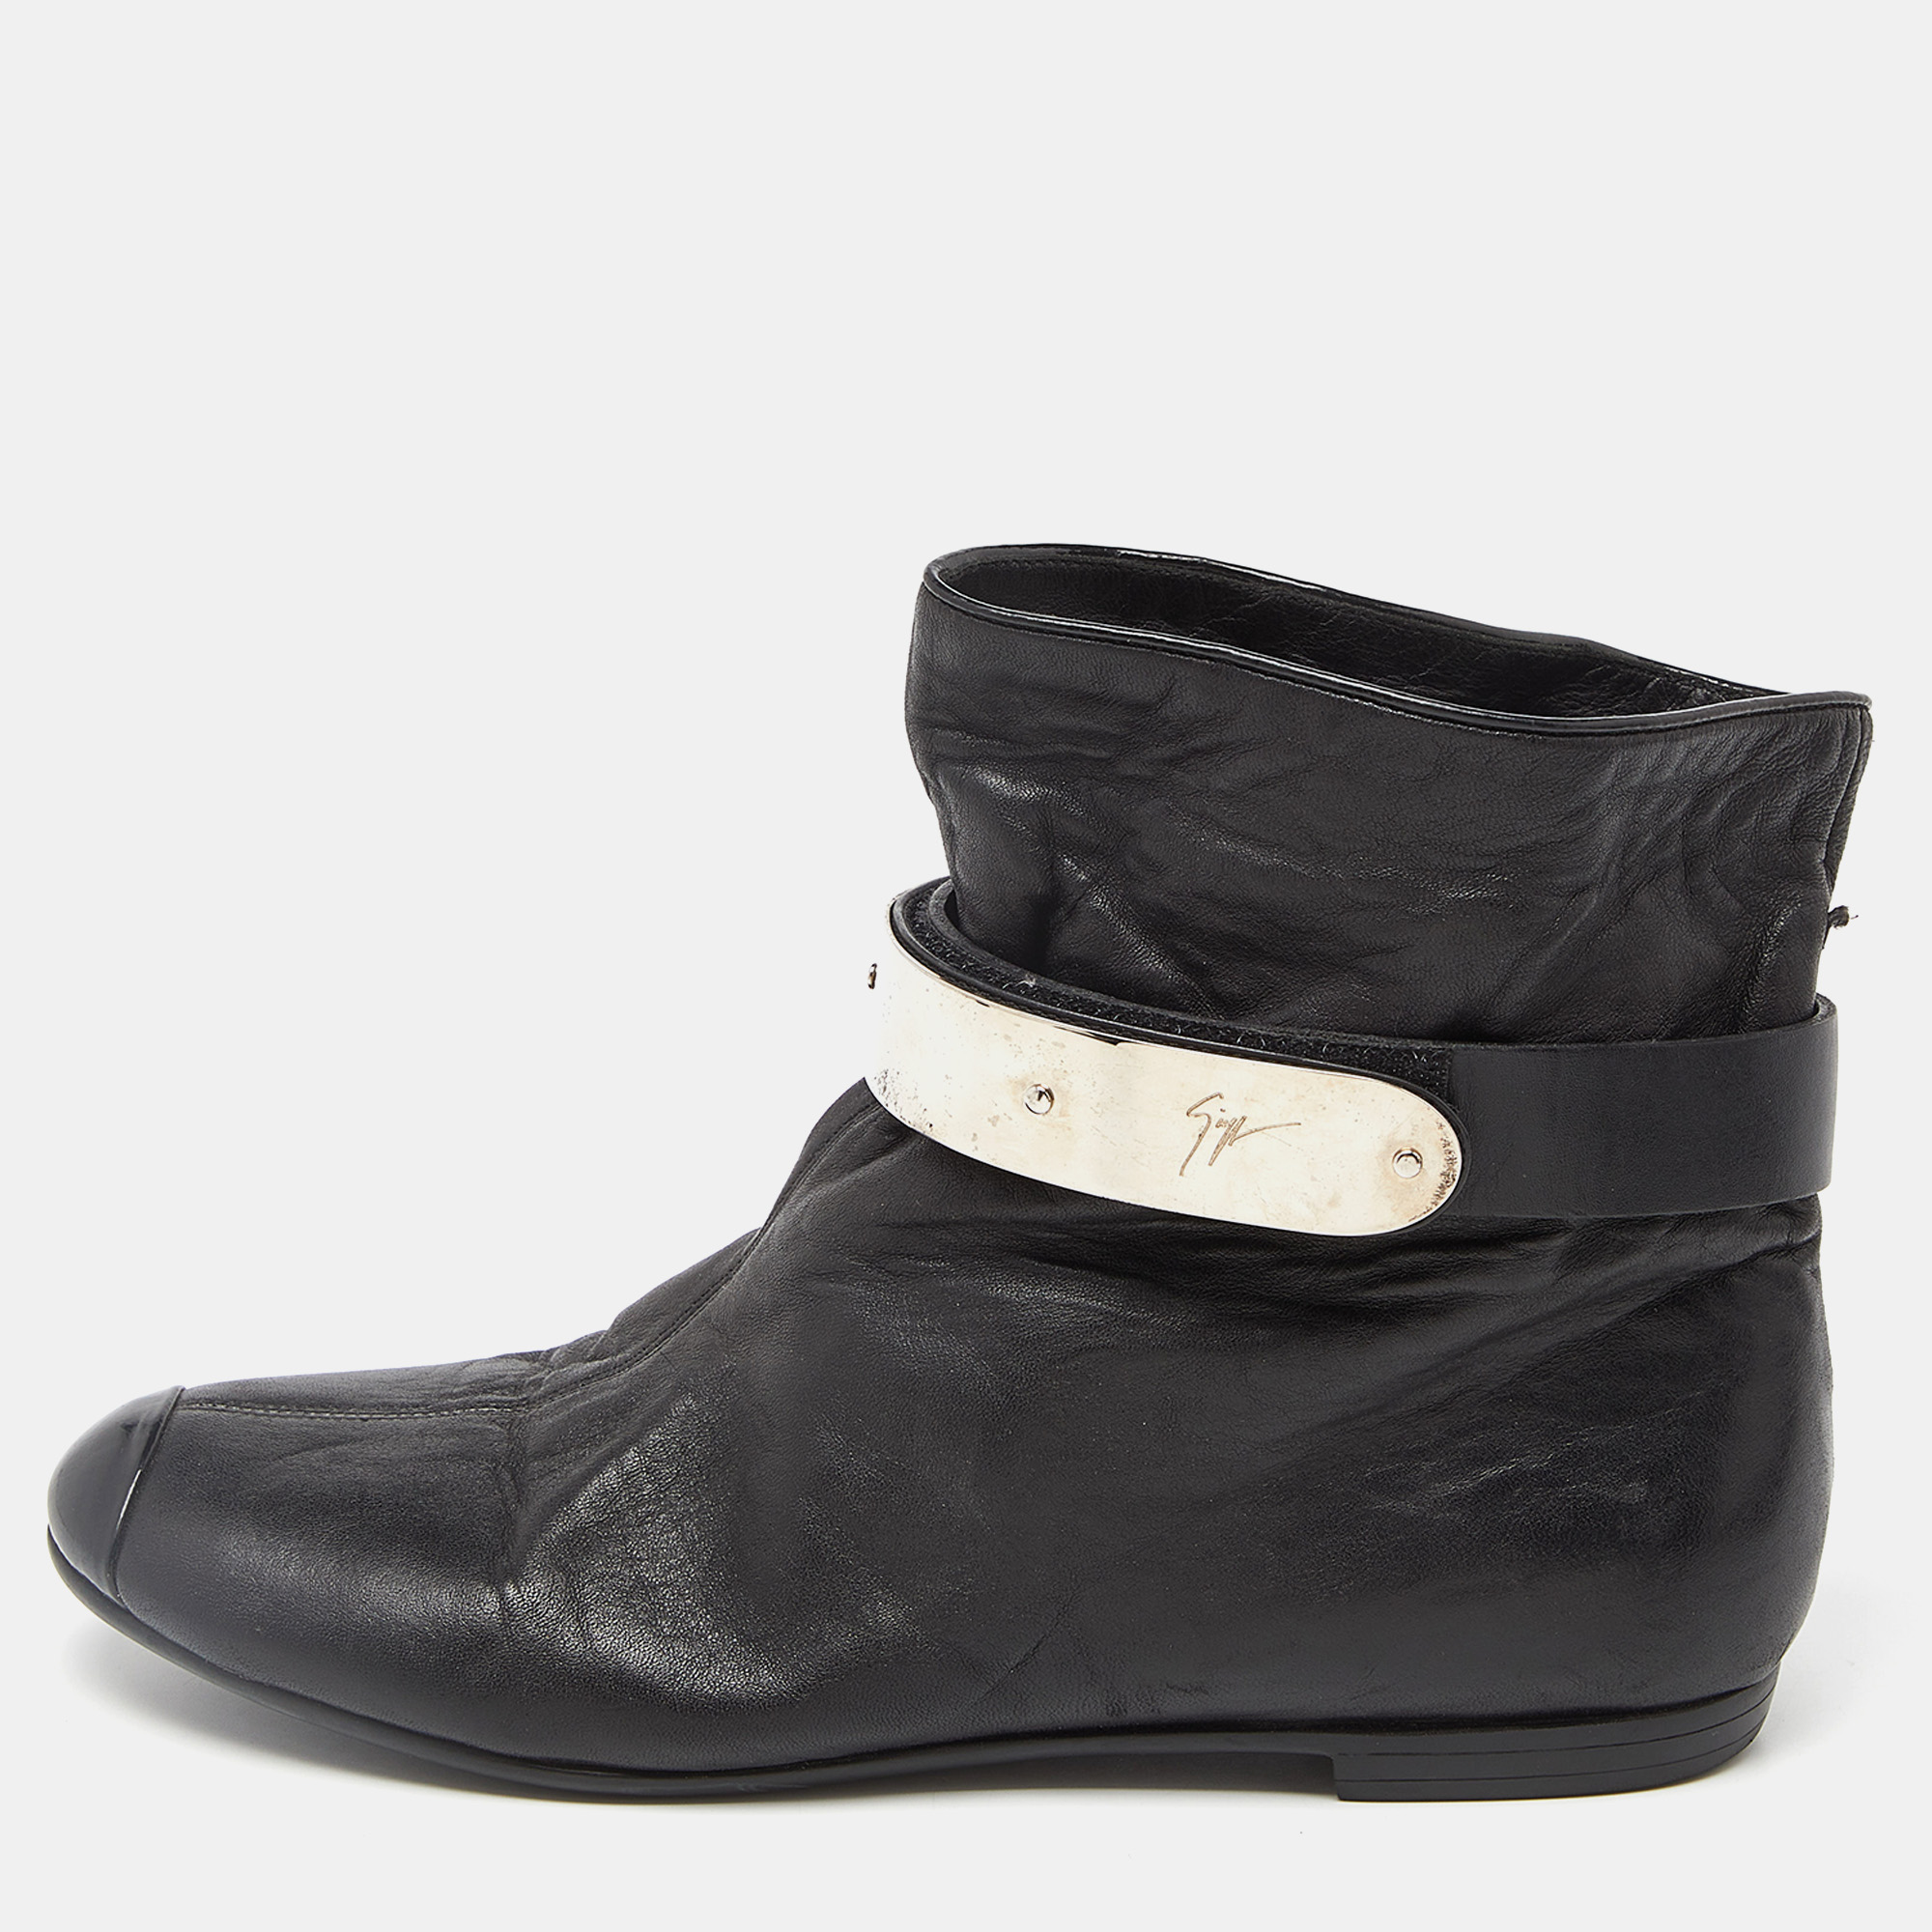 Giuseppe zanotti black leather ankle length boots size 37